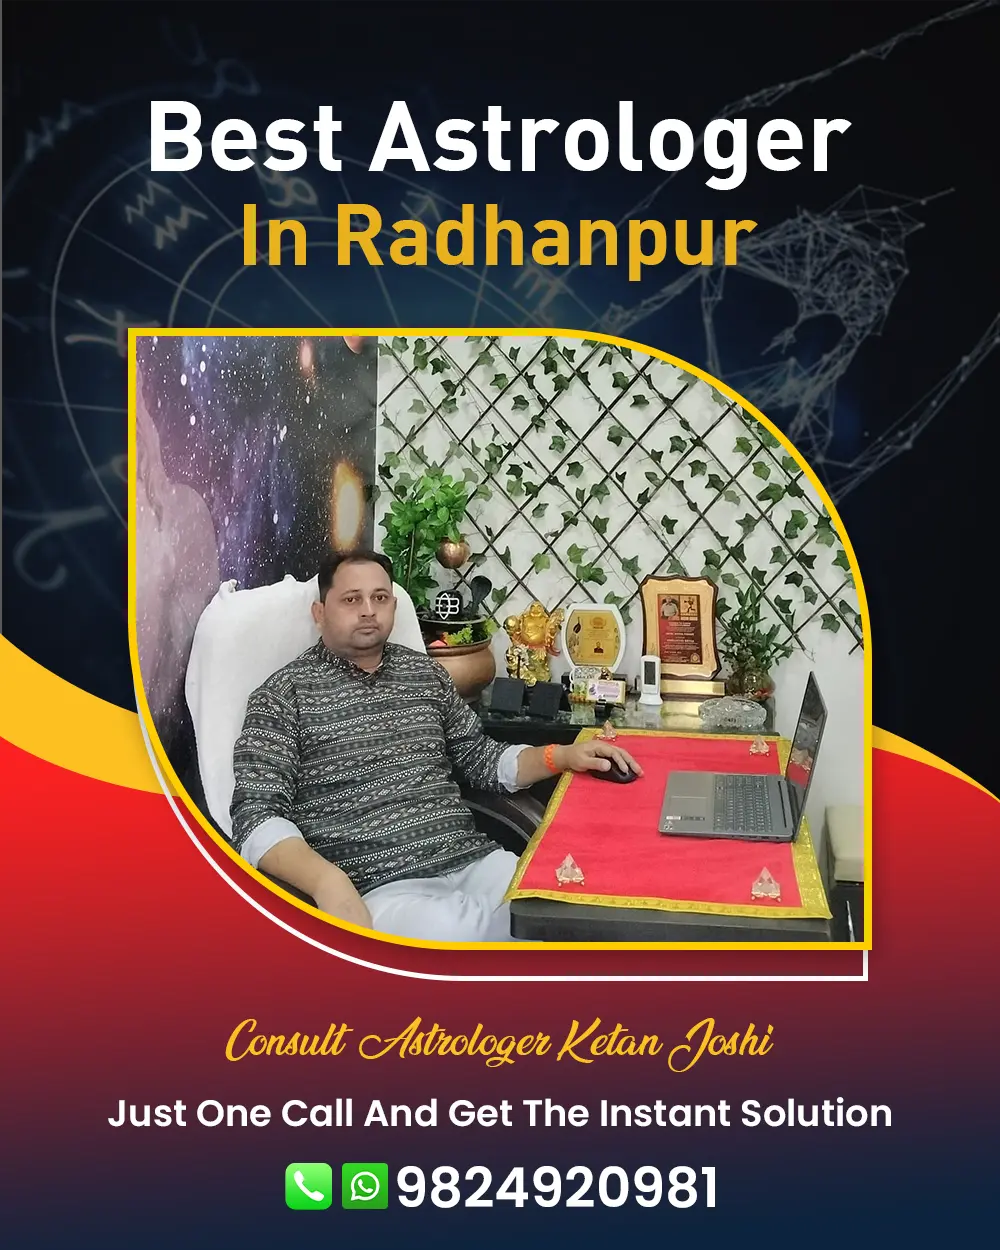 Best Astrologer In Radhanpur